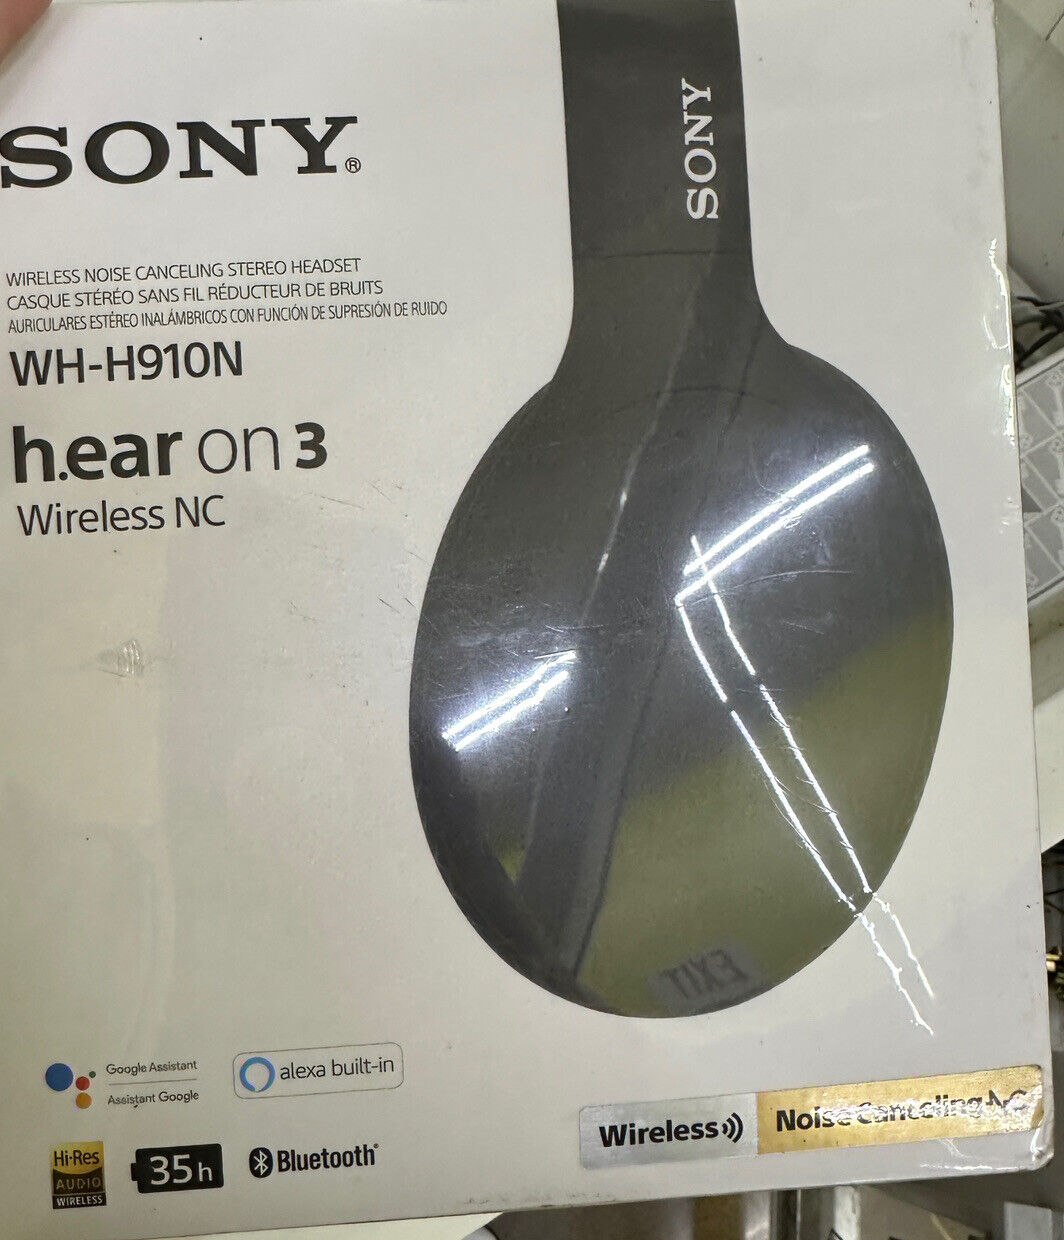 Sony WH-H910N On Ear Wireless Headphones - Black for sale online